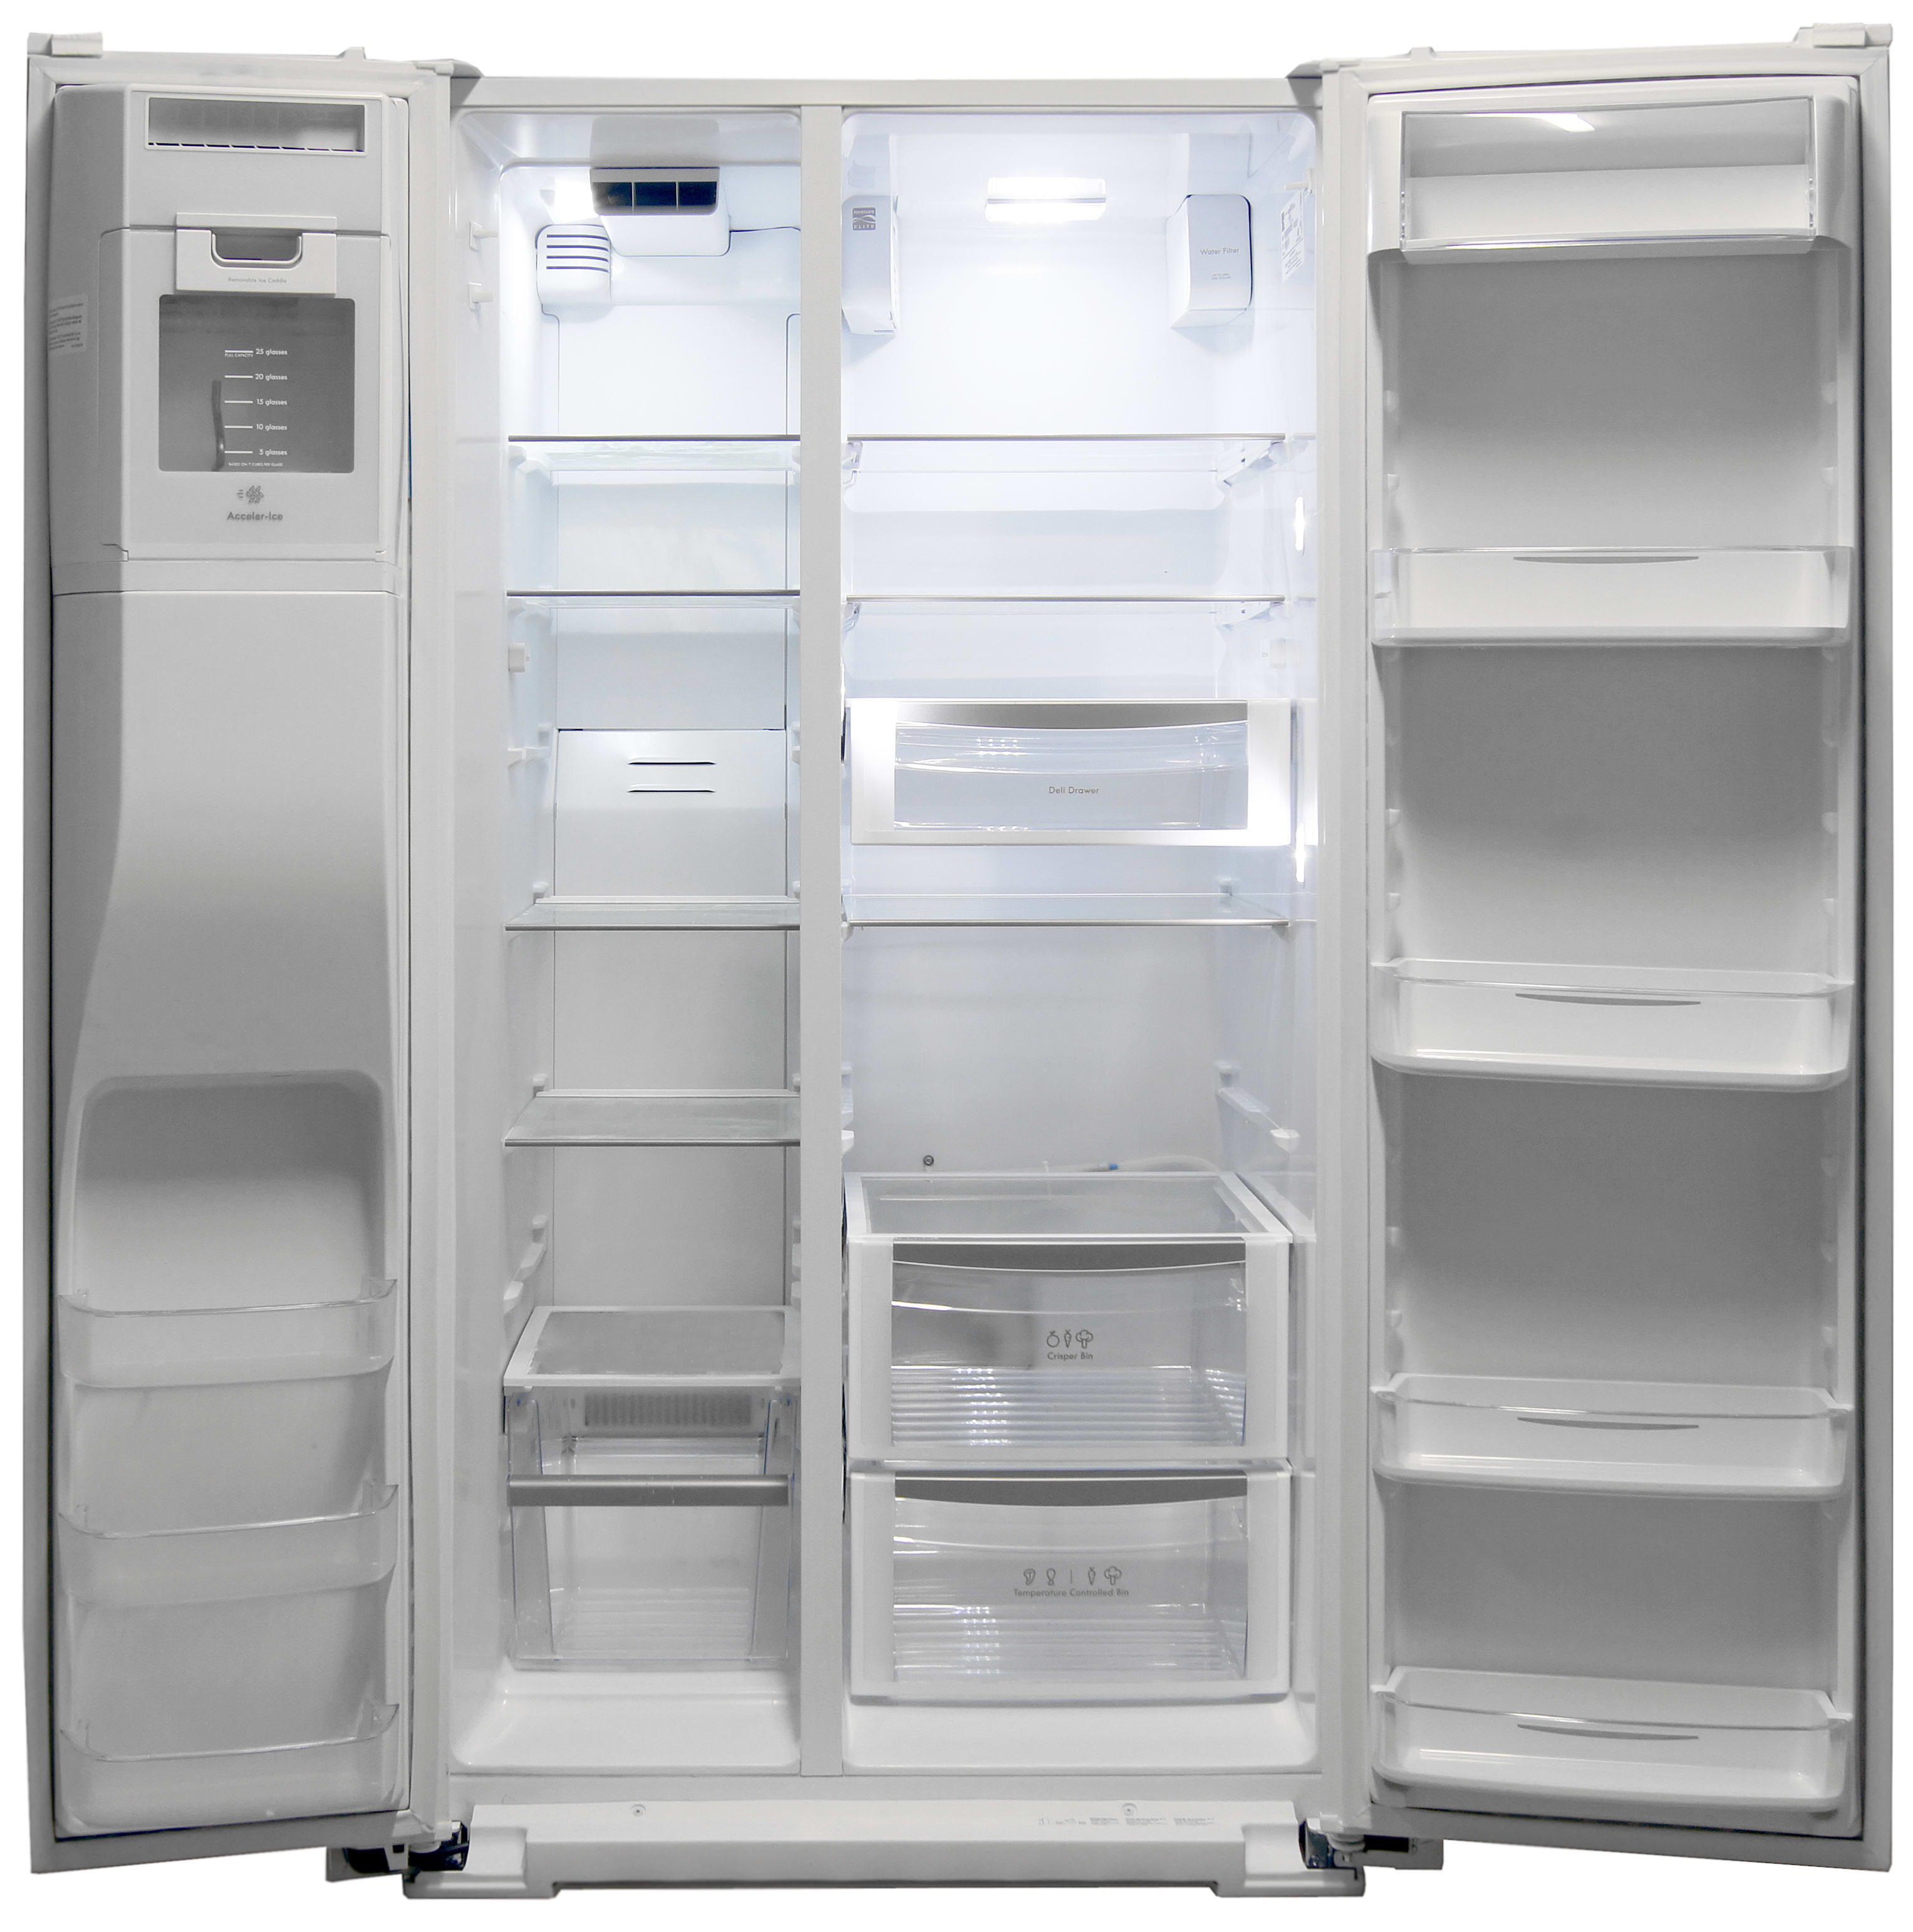 Kenmore Elite 51162 Refrigerator Review Refrigerators